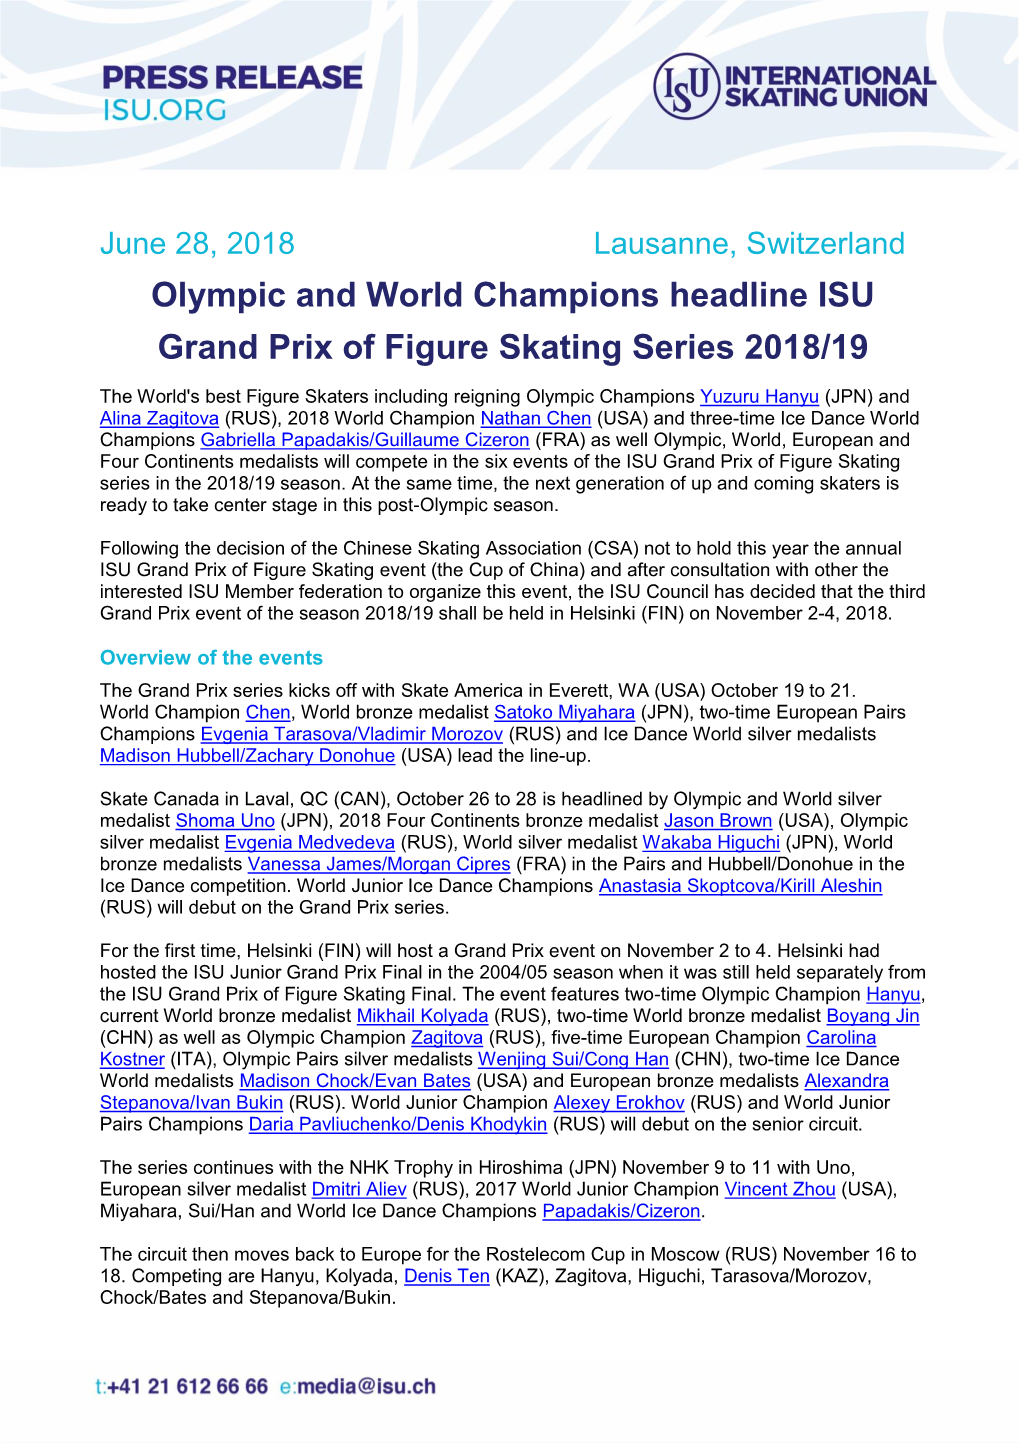 Olympic and World Champions Headline ISU Grand Prix of Figure Skating Series 2018/19